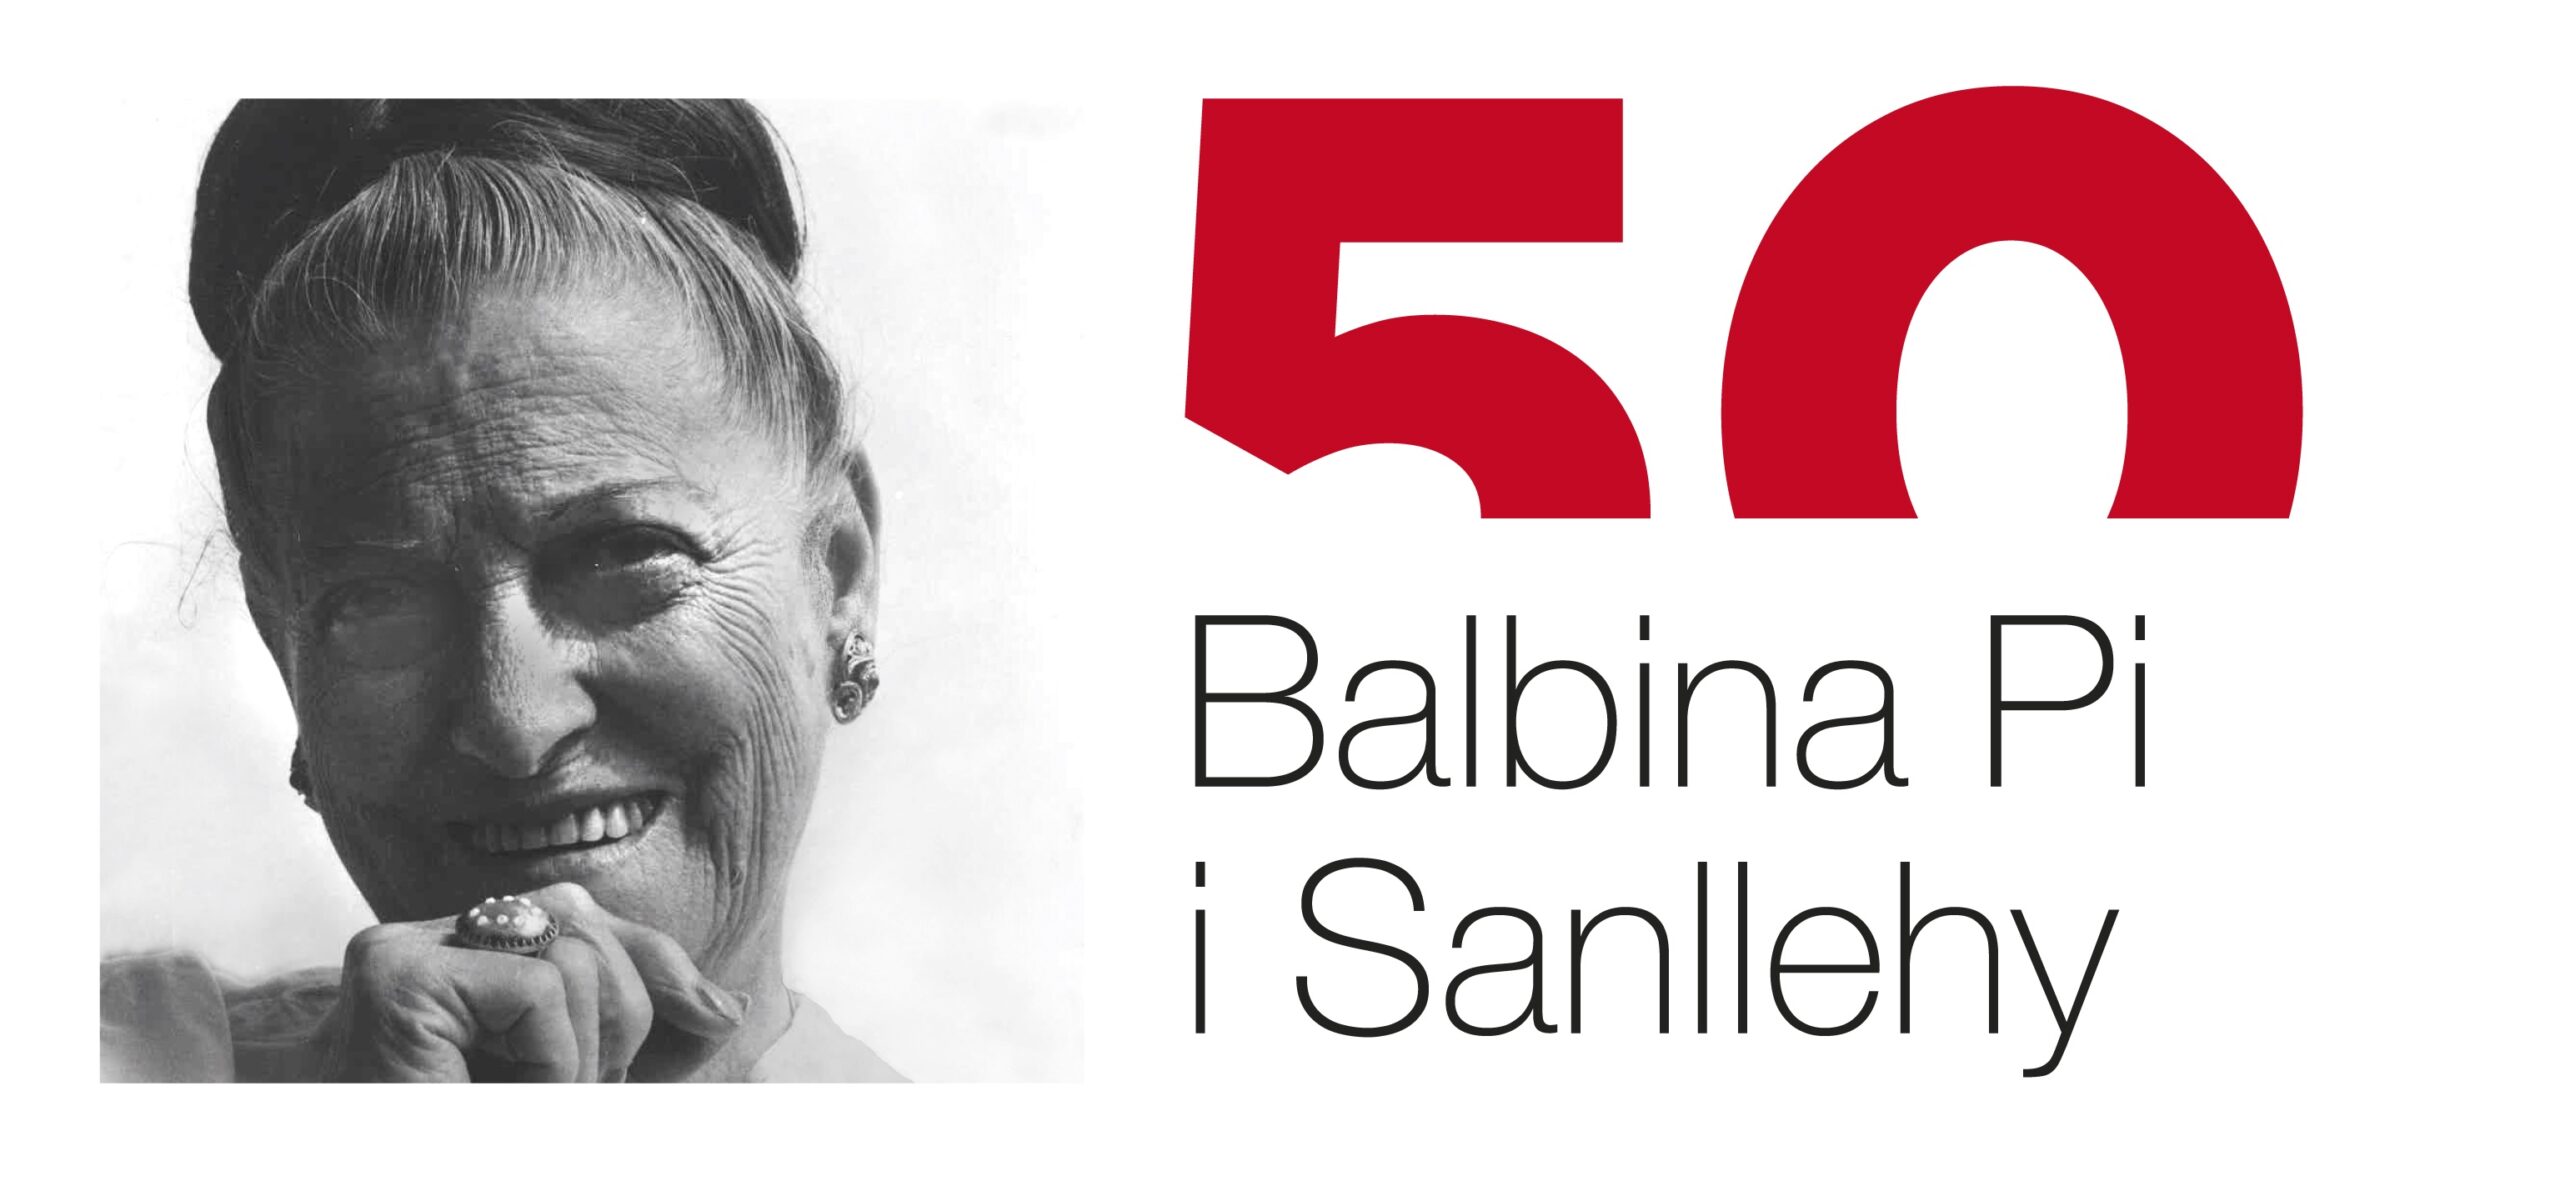 Balbina Pi i Sanllehy: trabajadora textil, anarcosindicalista y feminista